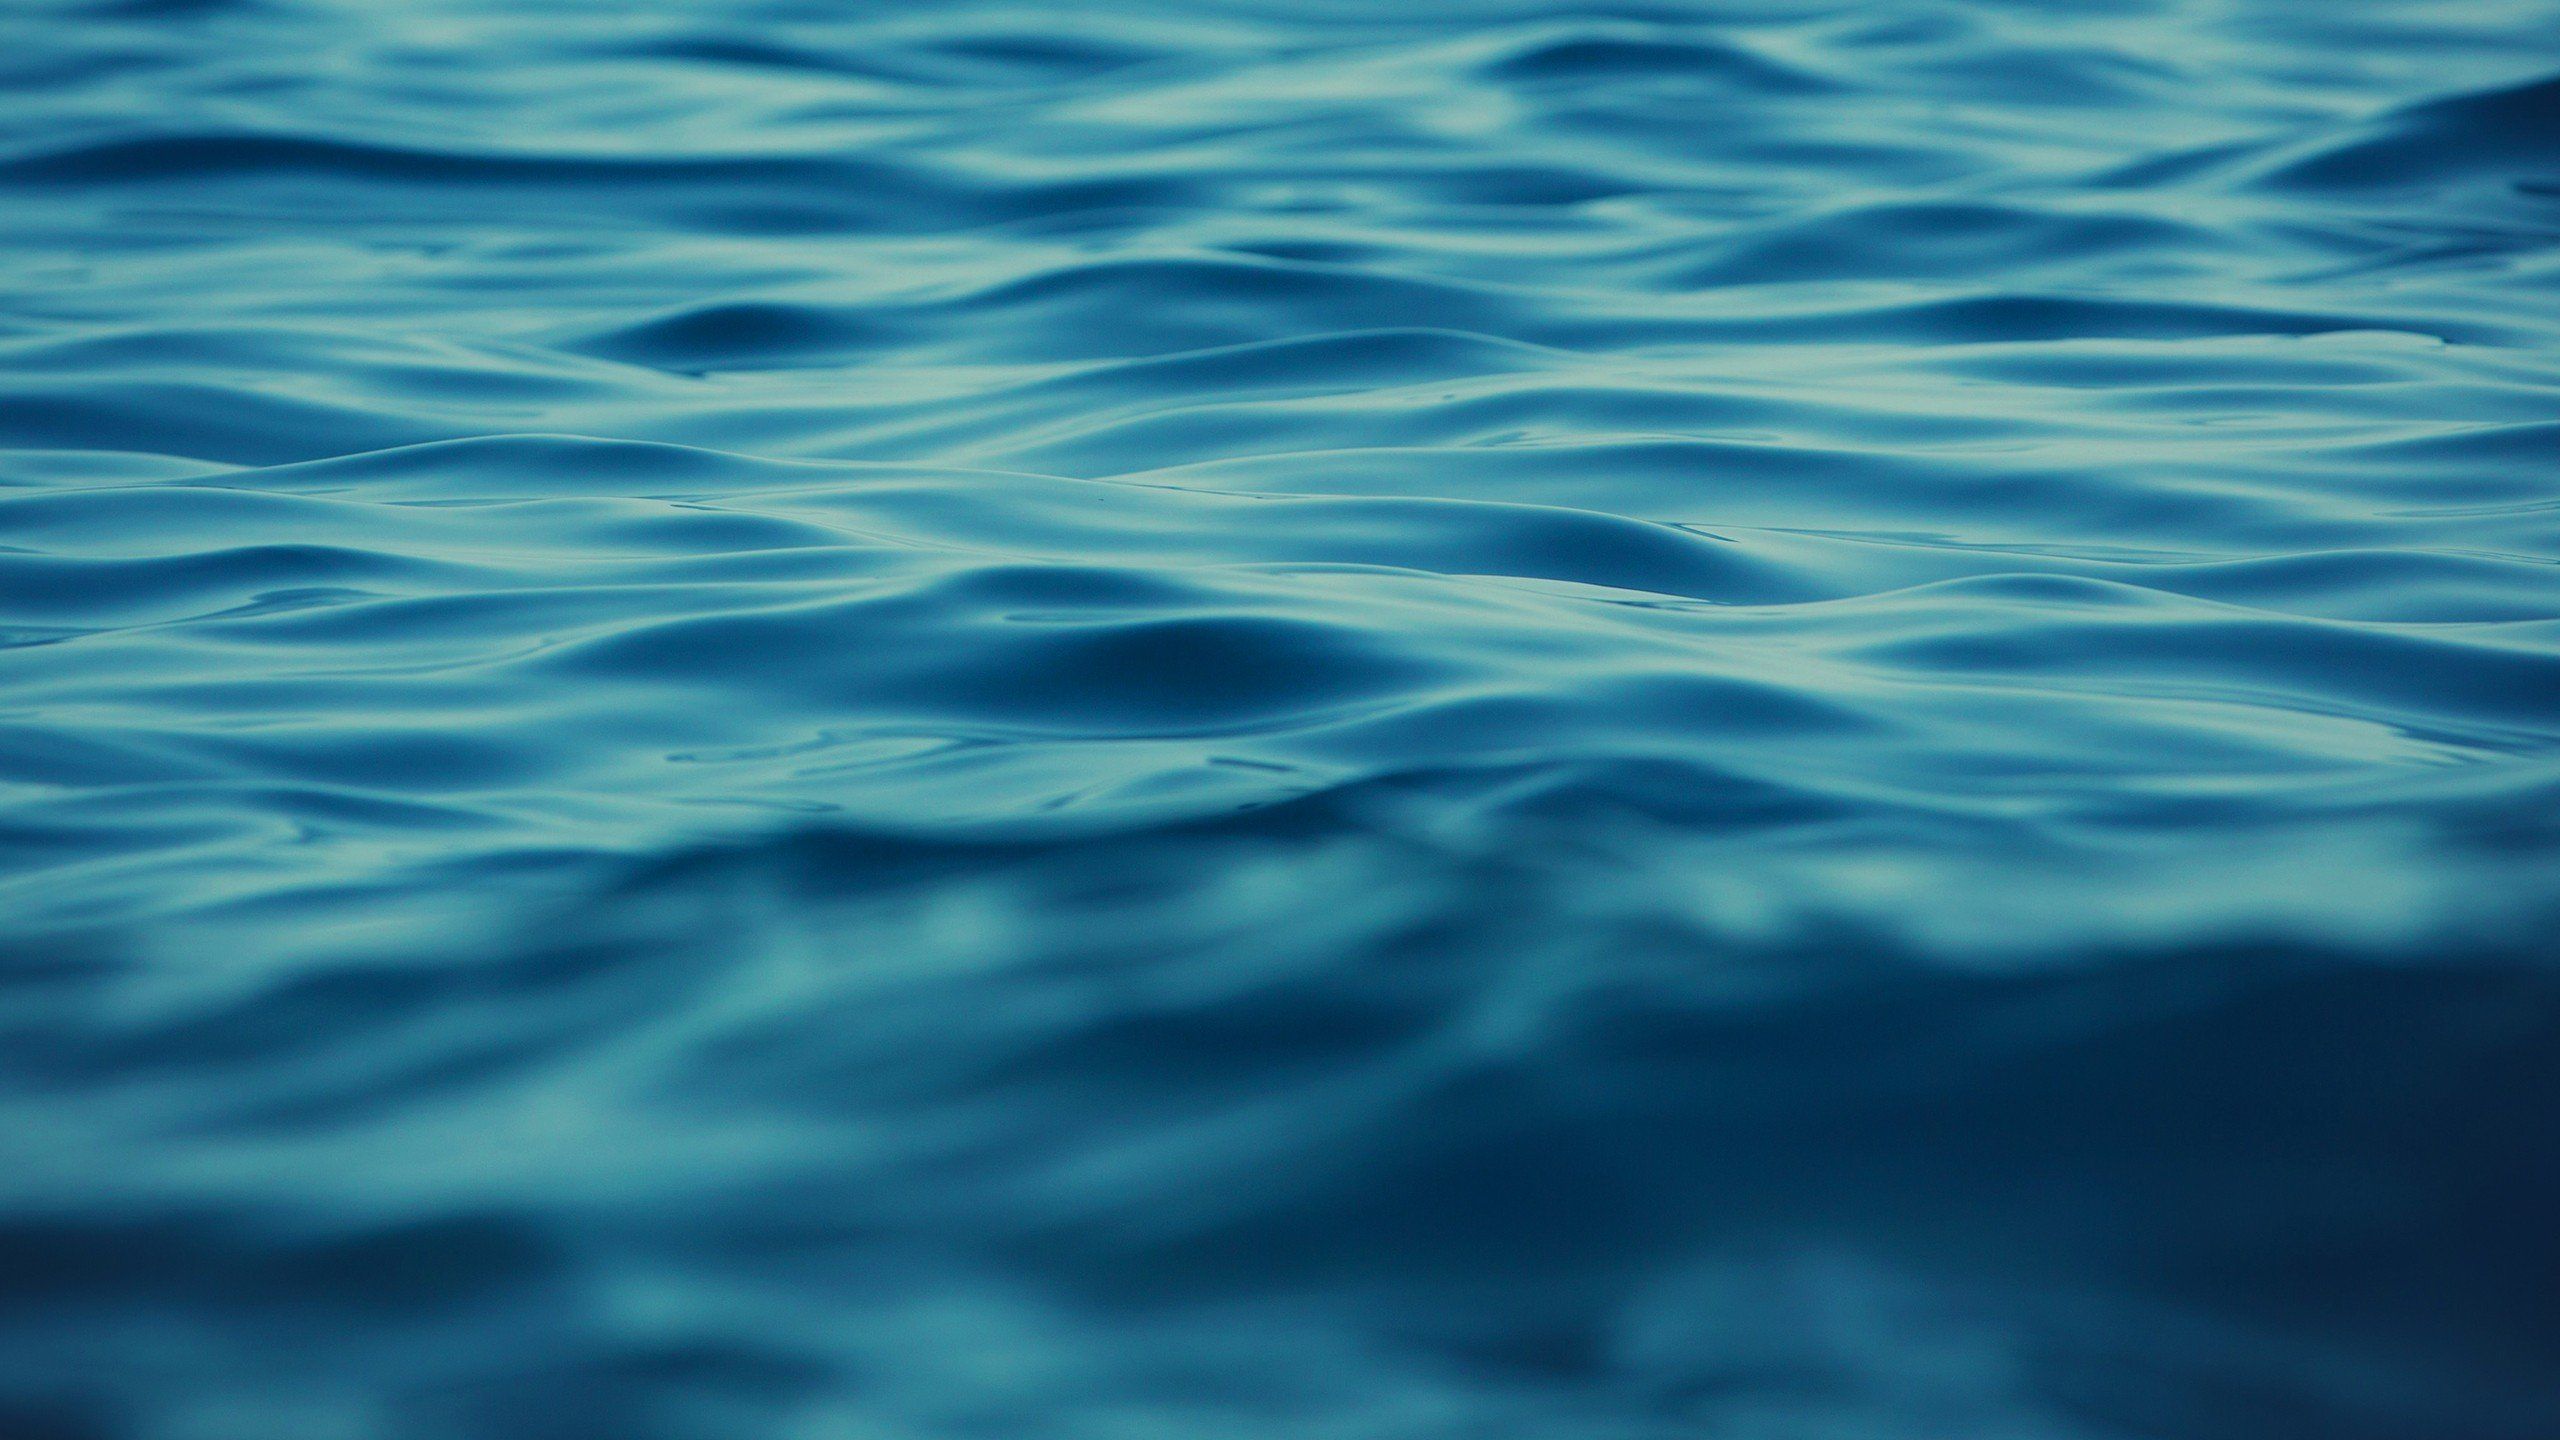 Free download cloud reflection rock HD 4k ultrahd wallpaper wallpaper background [2560x1440] for your Desktop, Mobile & Tablet. Explore 4K Ocean Wallpaper. Blue Ocean Wallpaper, Free Ocean Desktop Wallpaper